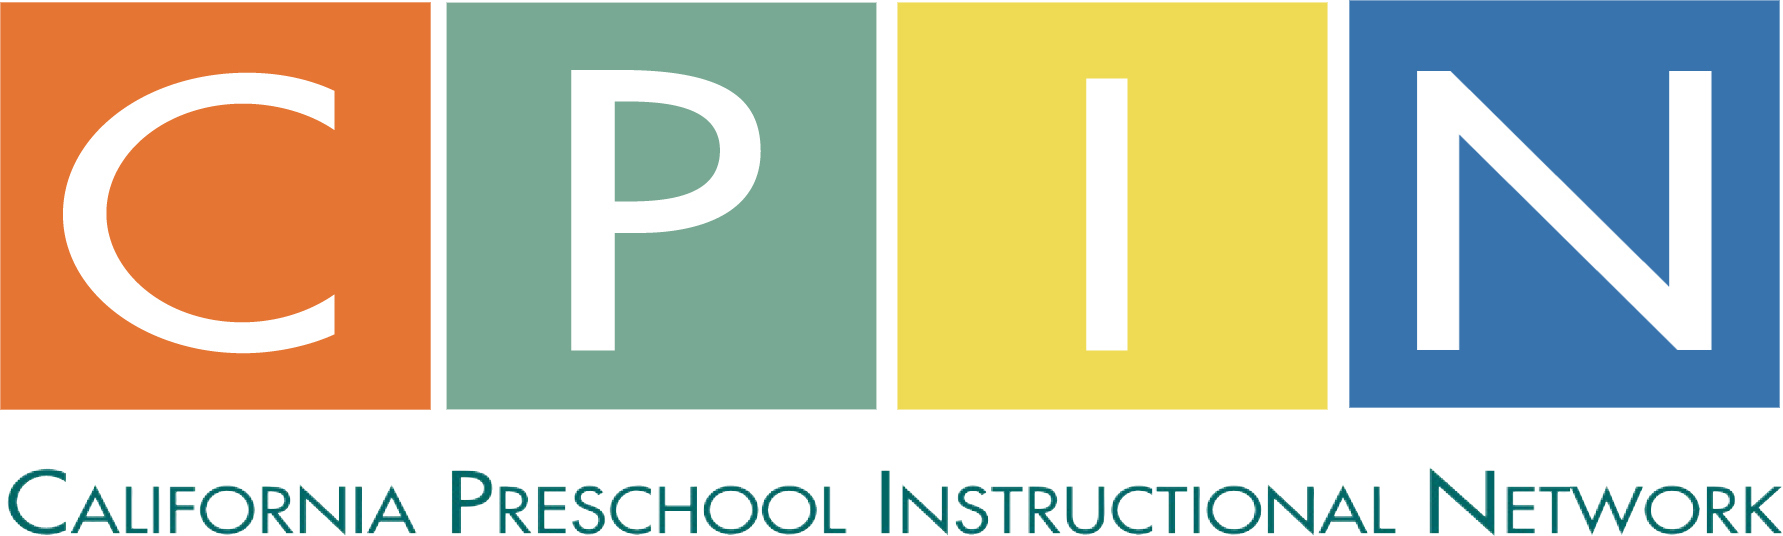 Logo of the California Preschool Instructional Network